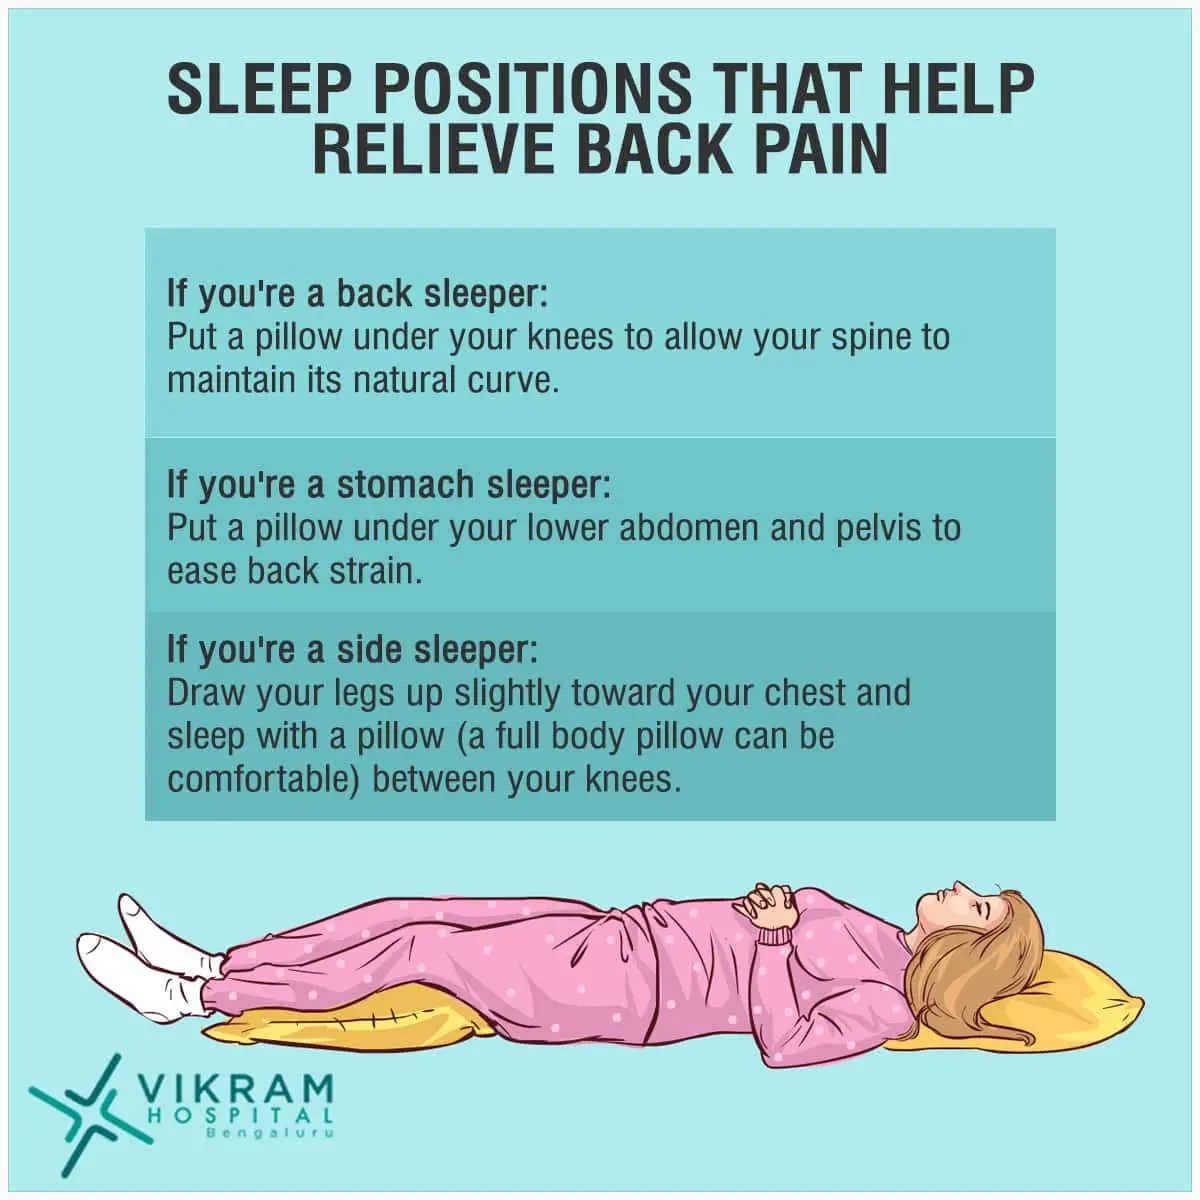 How To Sleep To Help Lower Back Pain